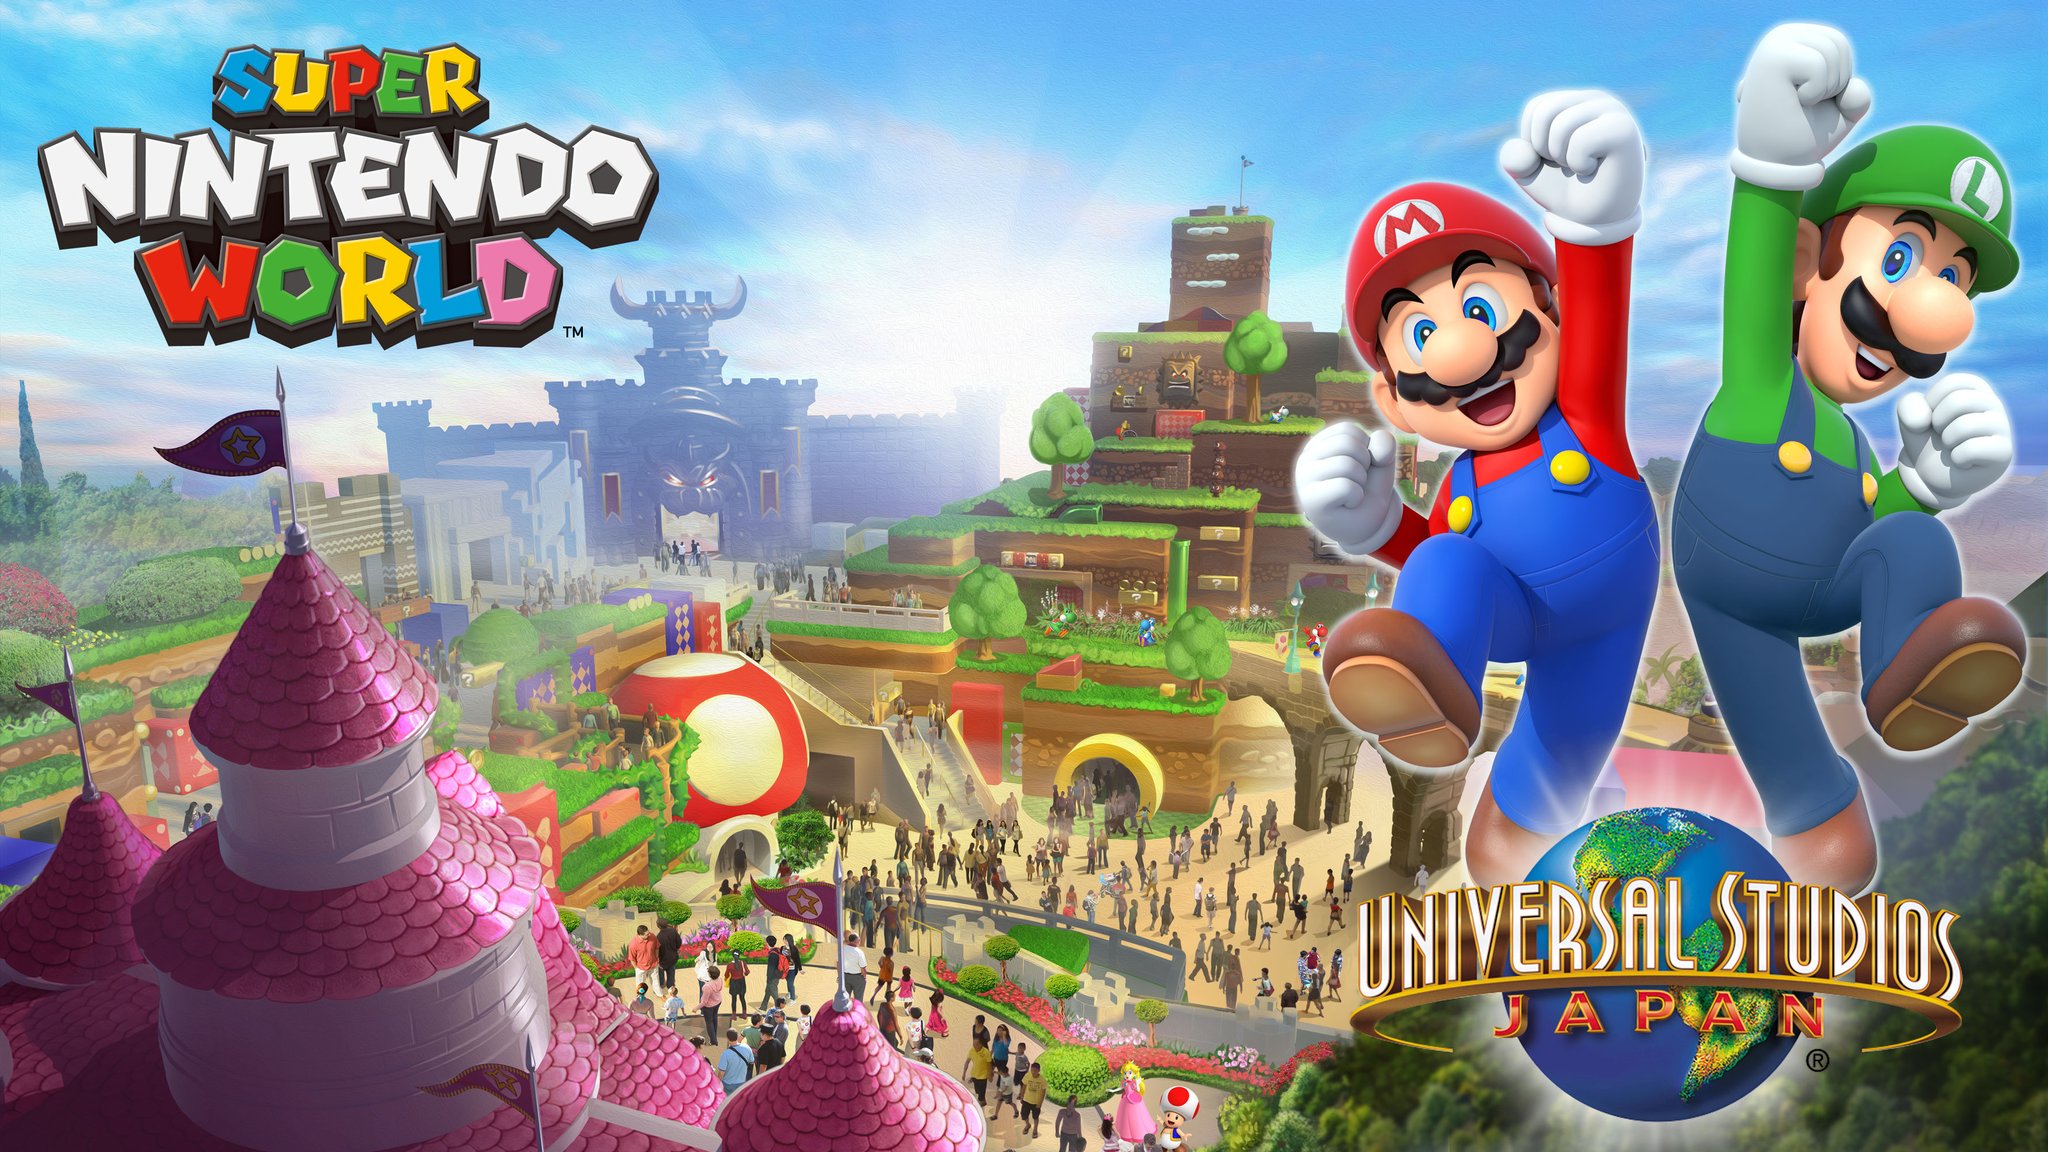 Super Nintendo world at Universal Studio Japan 2022